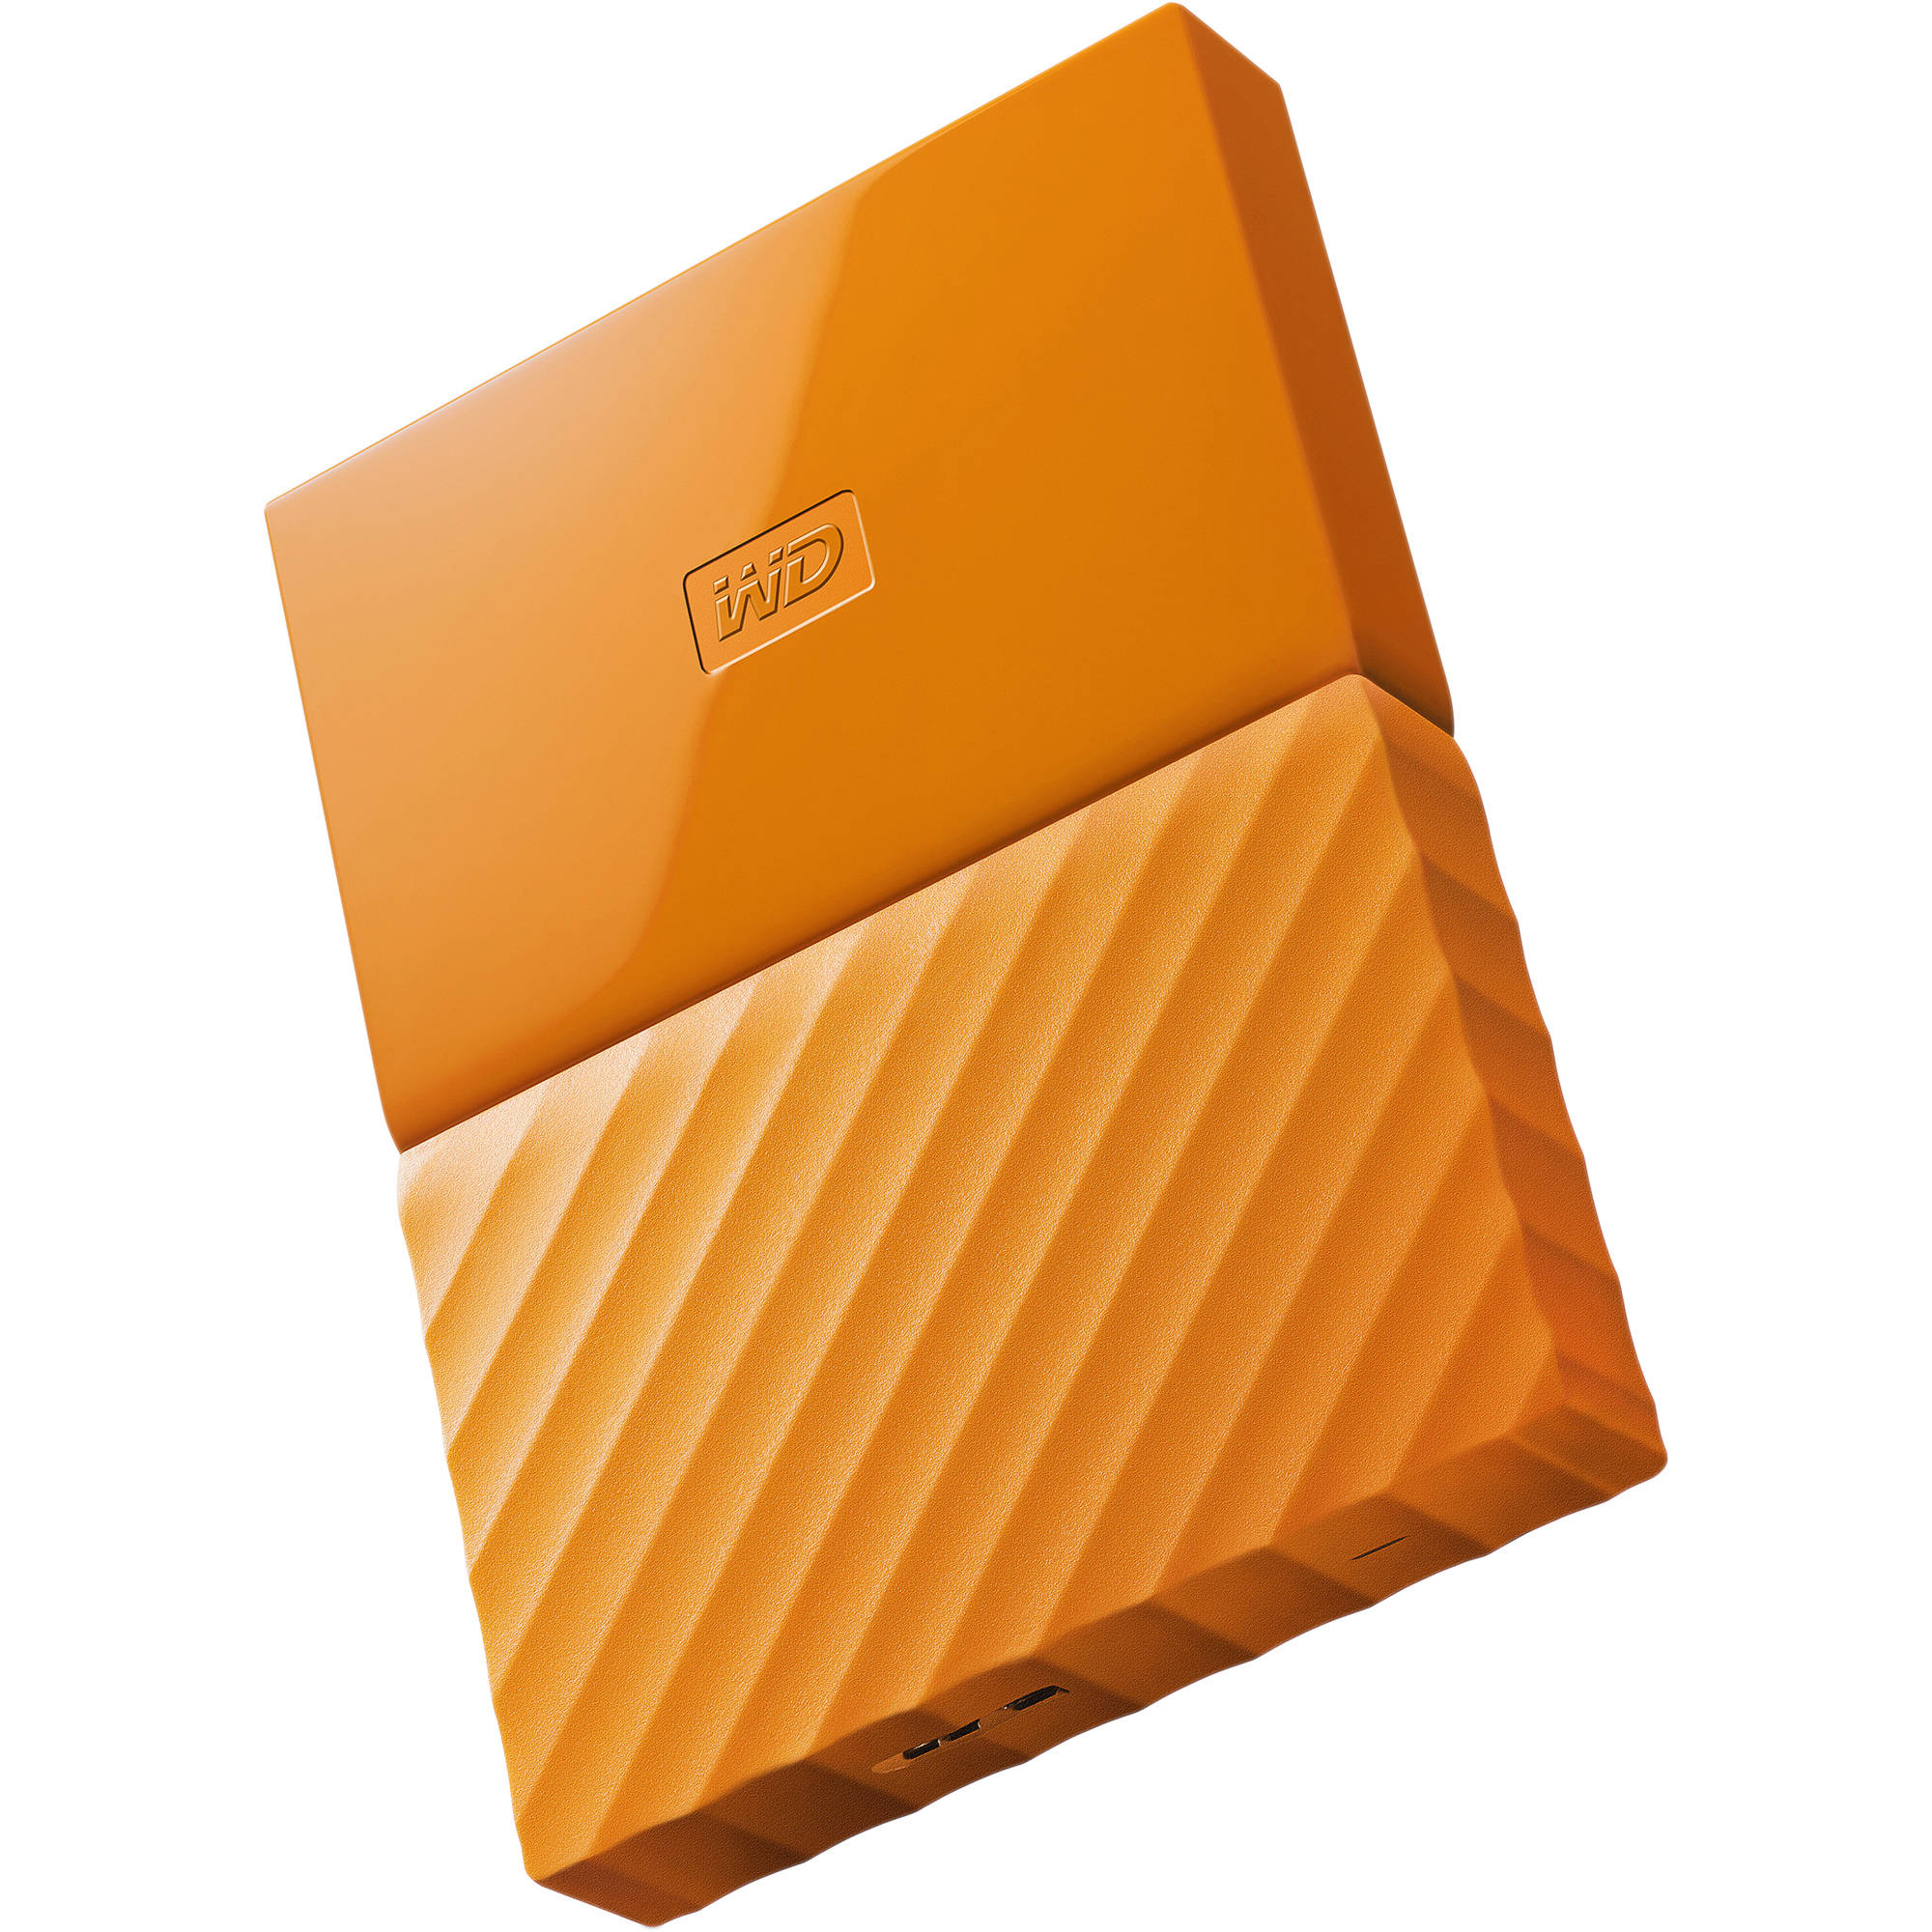 Original Western Digital My Passport Orange 3TB USB 3.0 External Hard Drive (WDBYFT0030BOR-WESN)